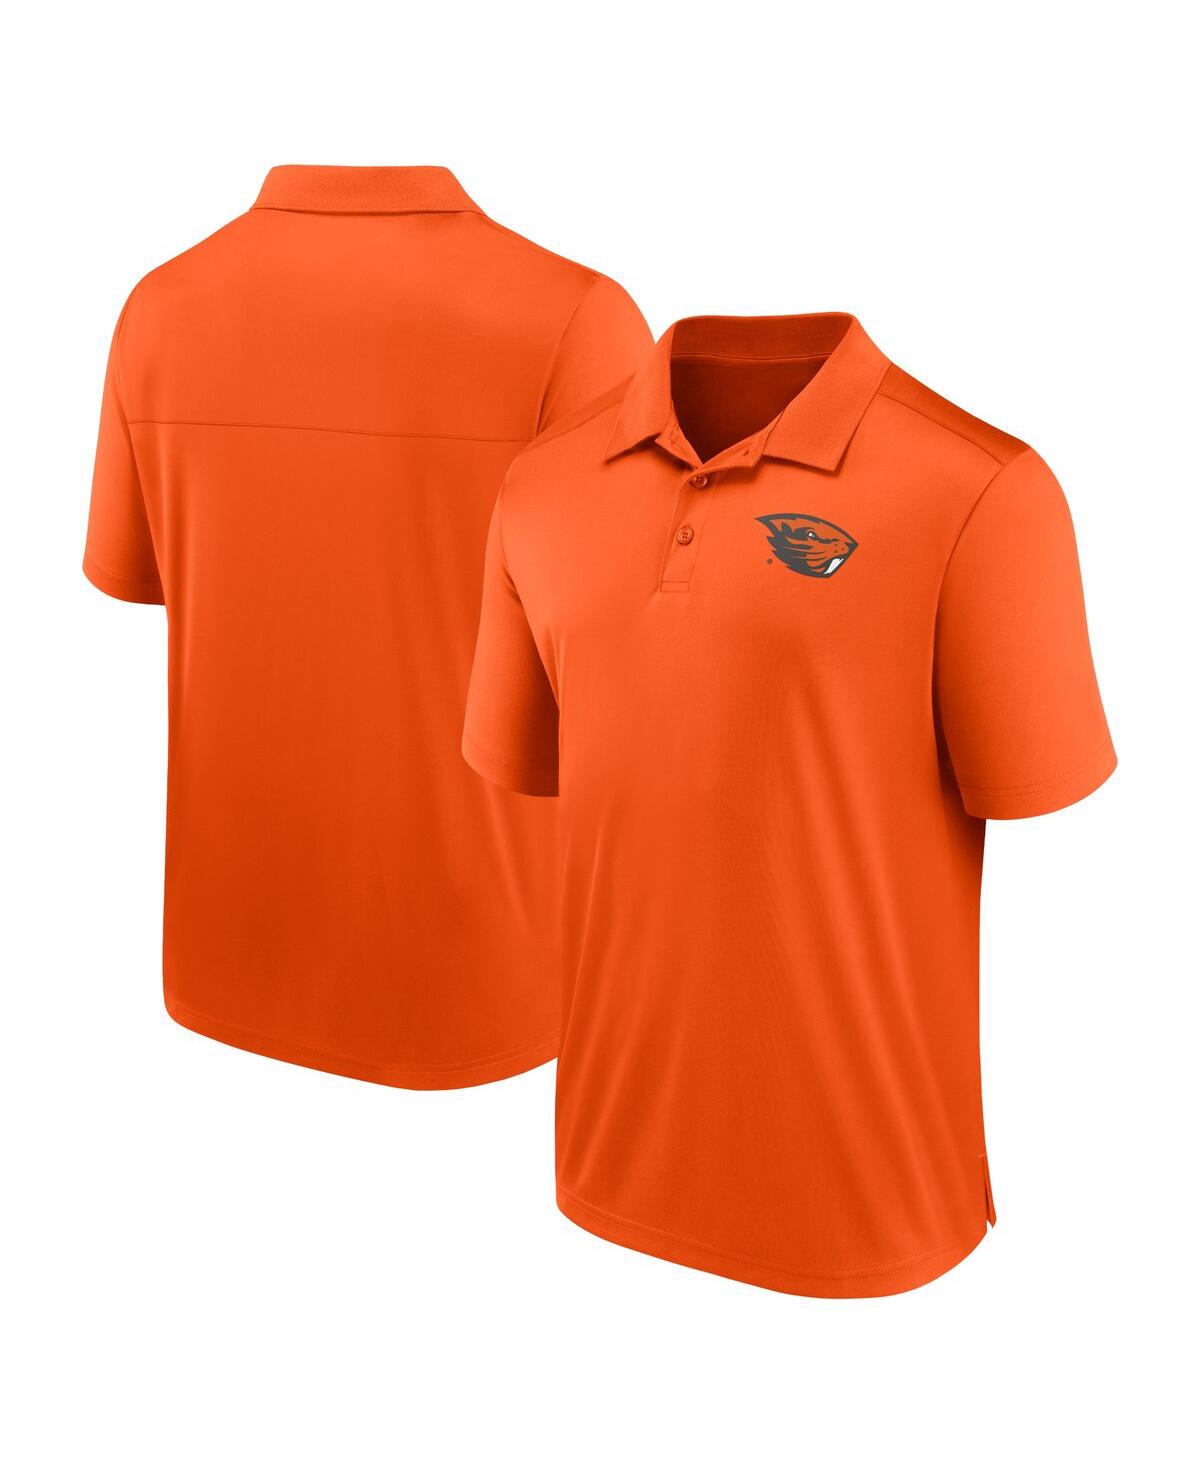 Men's Fanatics Orange Oregon State Beavers Left Side Block Polo Shirt - Orange